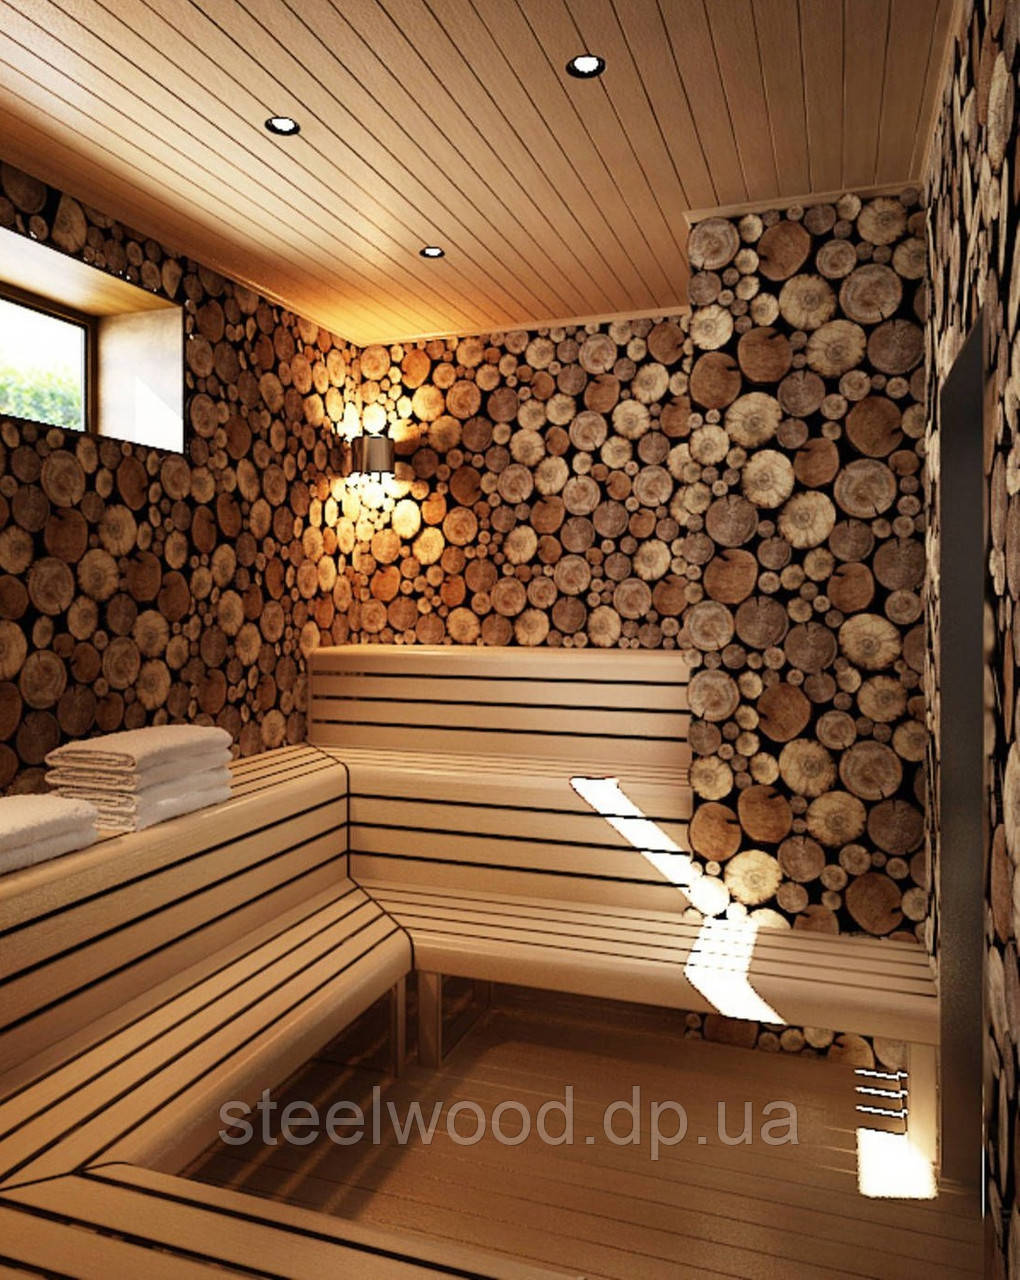 Декорирование стен бани срезами из дерева